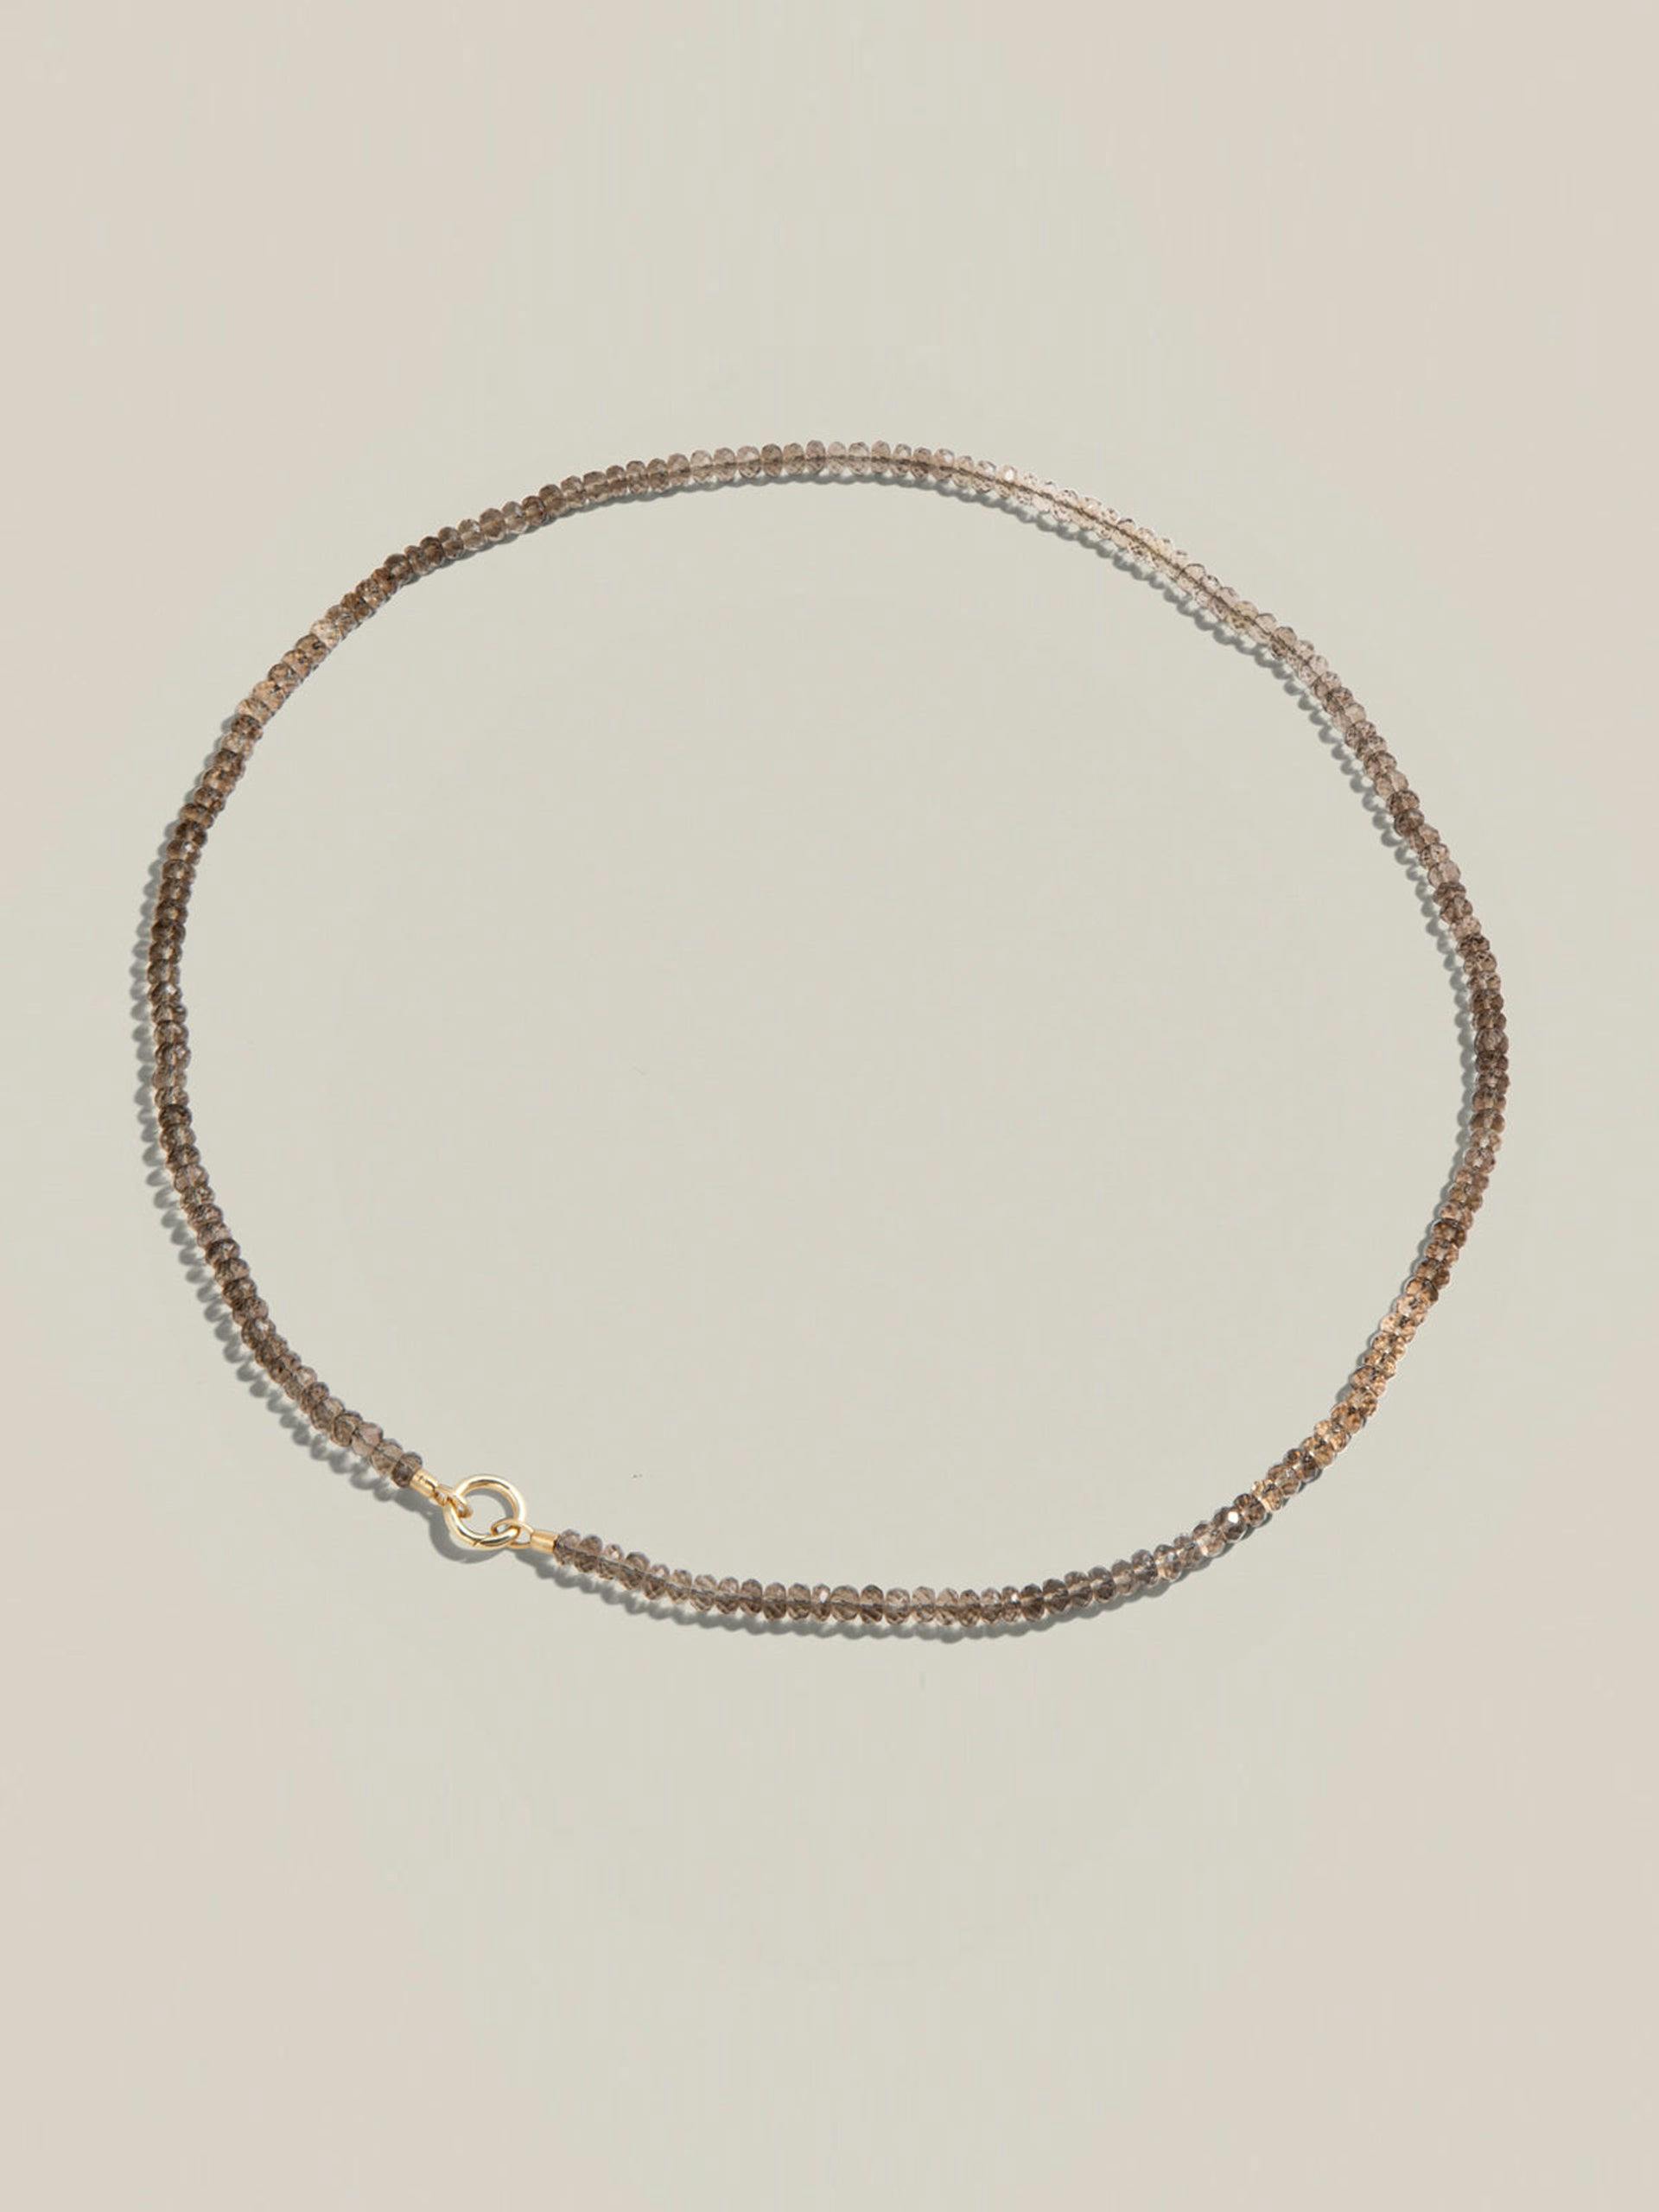 Smokey quartz beaded necklace